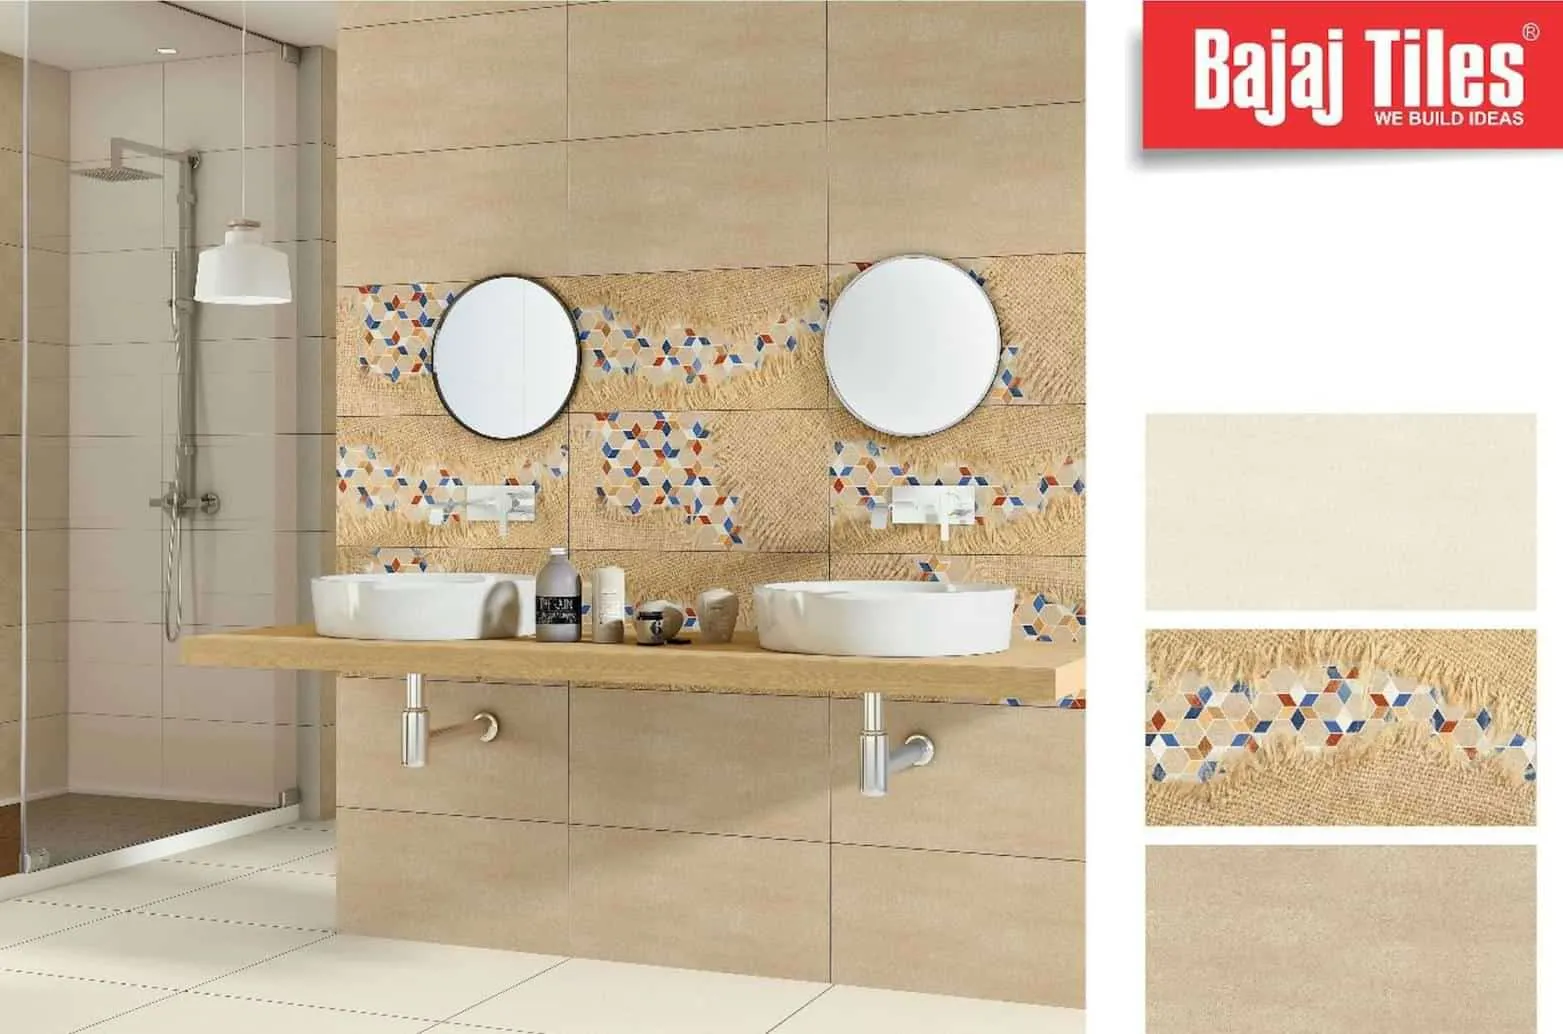 Bajaj tiles with logo and bathroom sink in cream colour